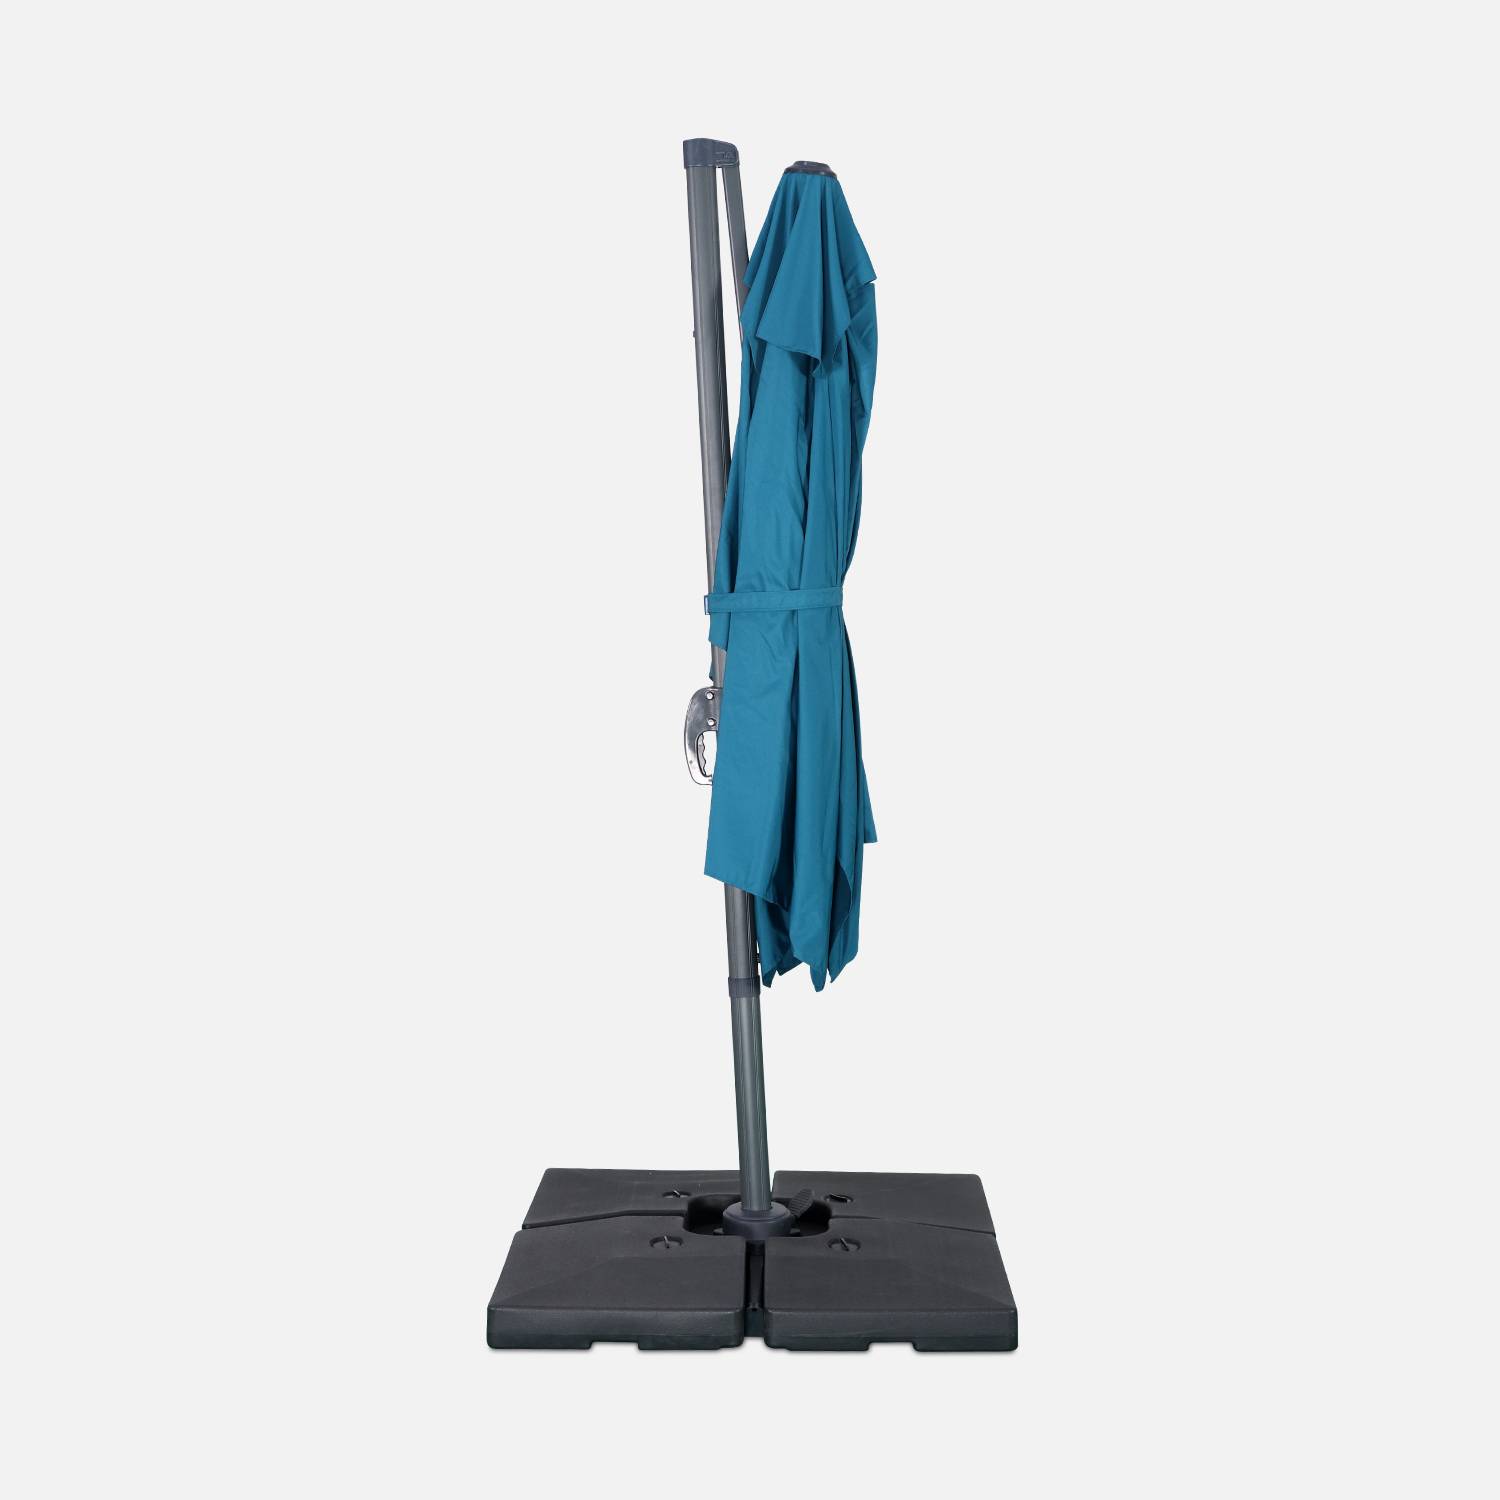 Rechthoekige zweefparasol 2x3m - Donker turquoise - Zweefparasol, kantelbaar, inklapbaar en 360° draaibaar Photo6